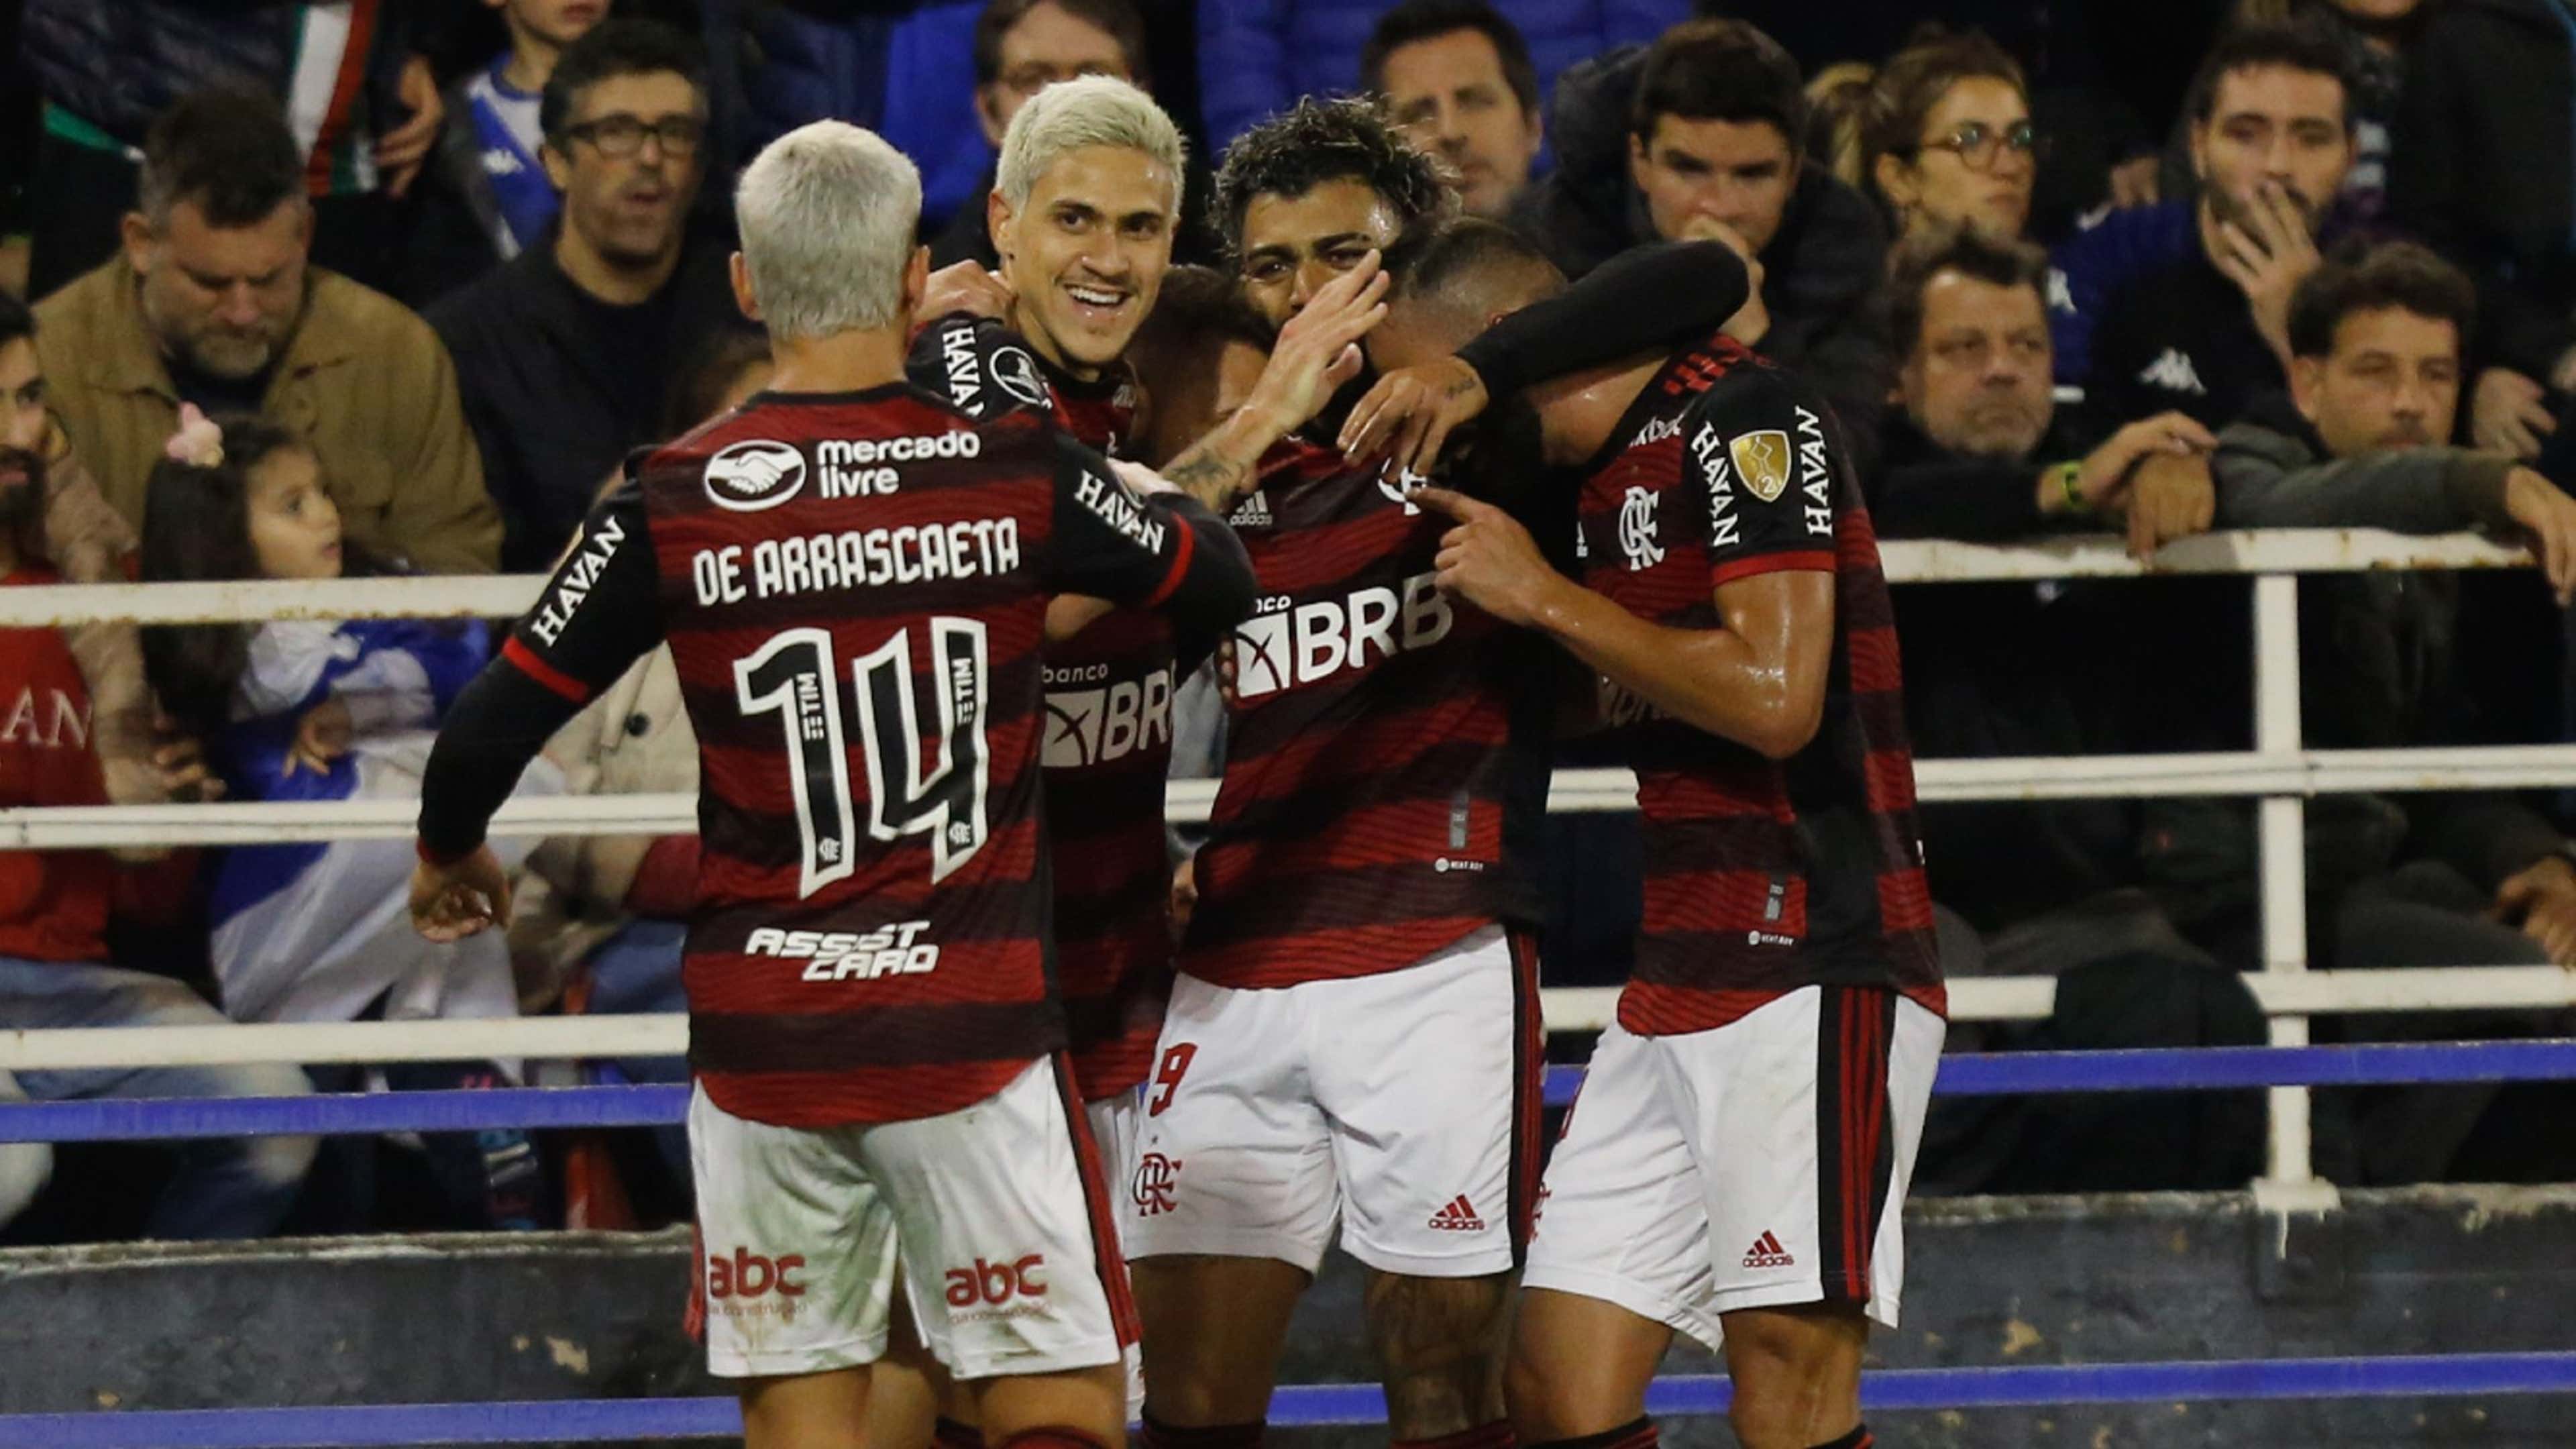 Tombense FC: Rising Stars in Brazilian Football